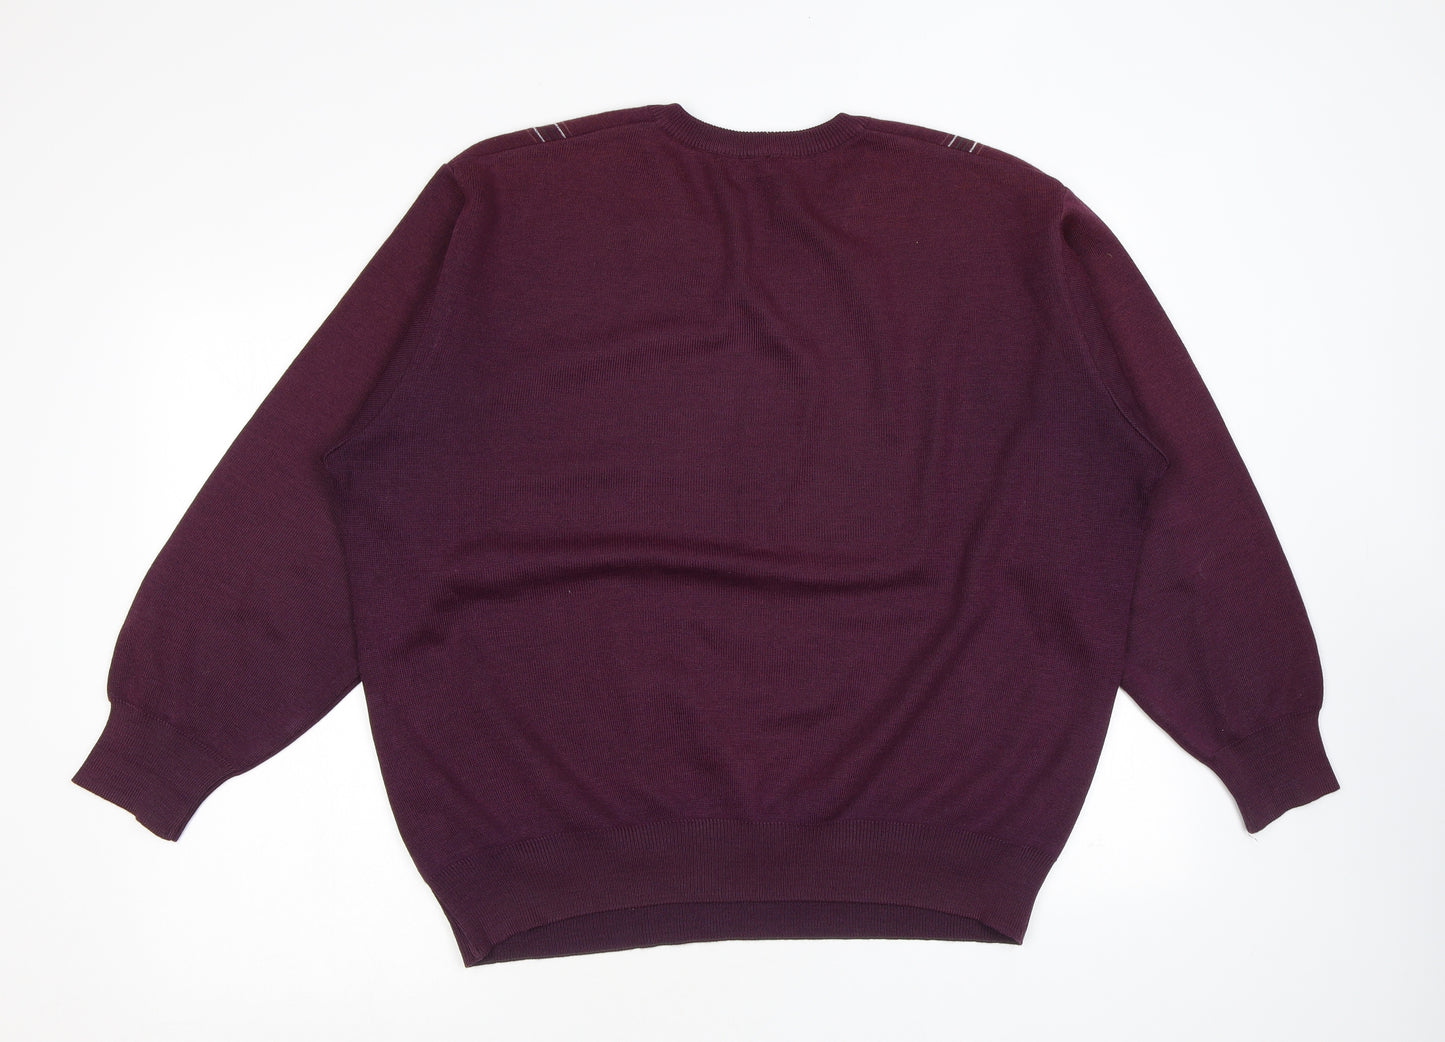 Gabicci Mens Purple V-Neck Check Wool Pullover Jumper Size 2XL Long Sleeve